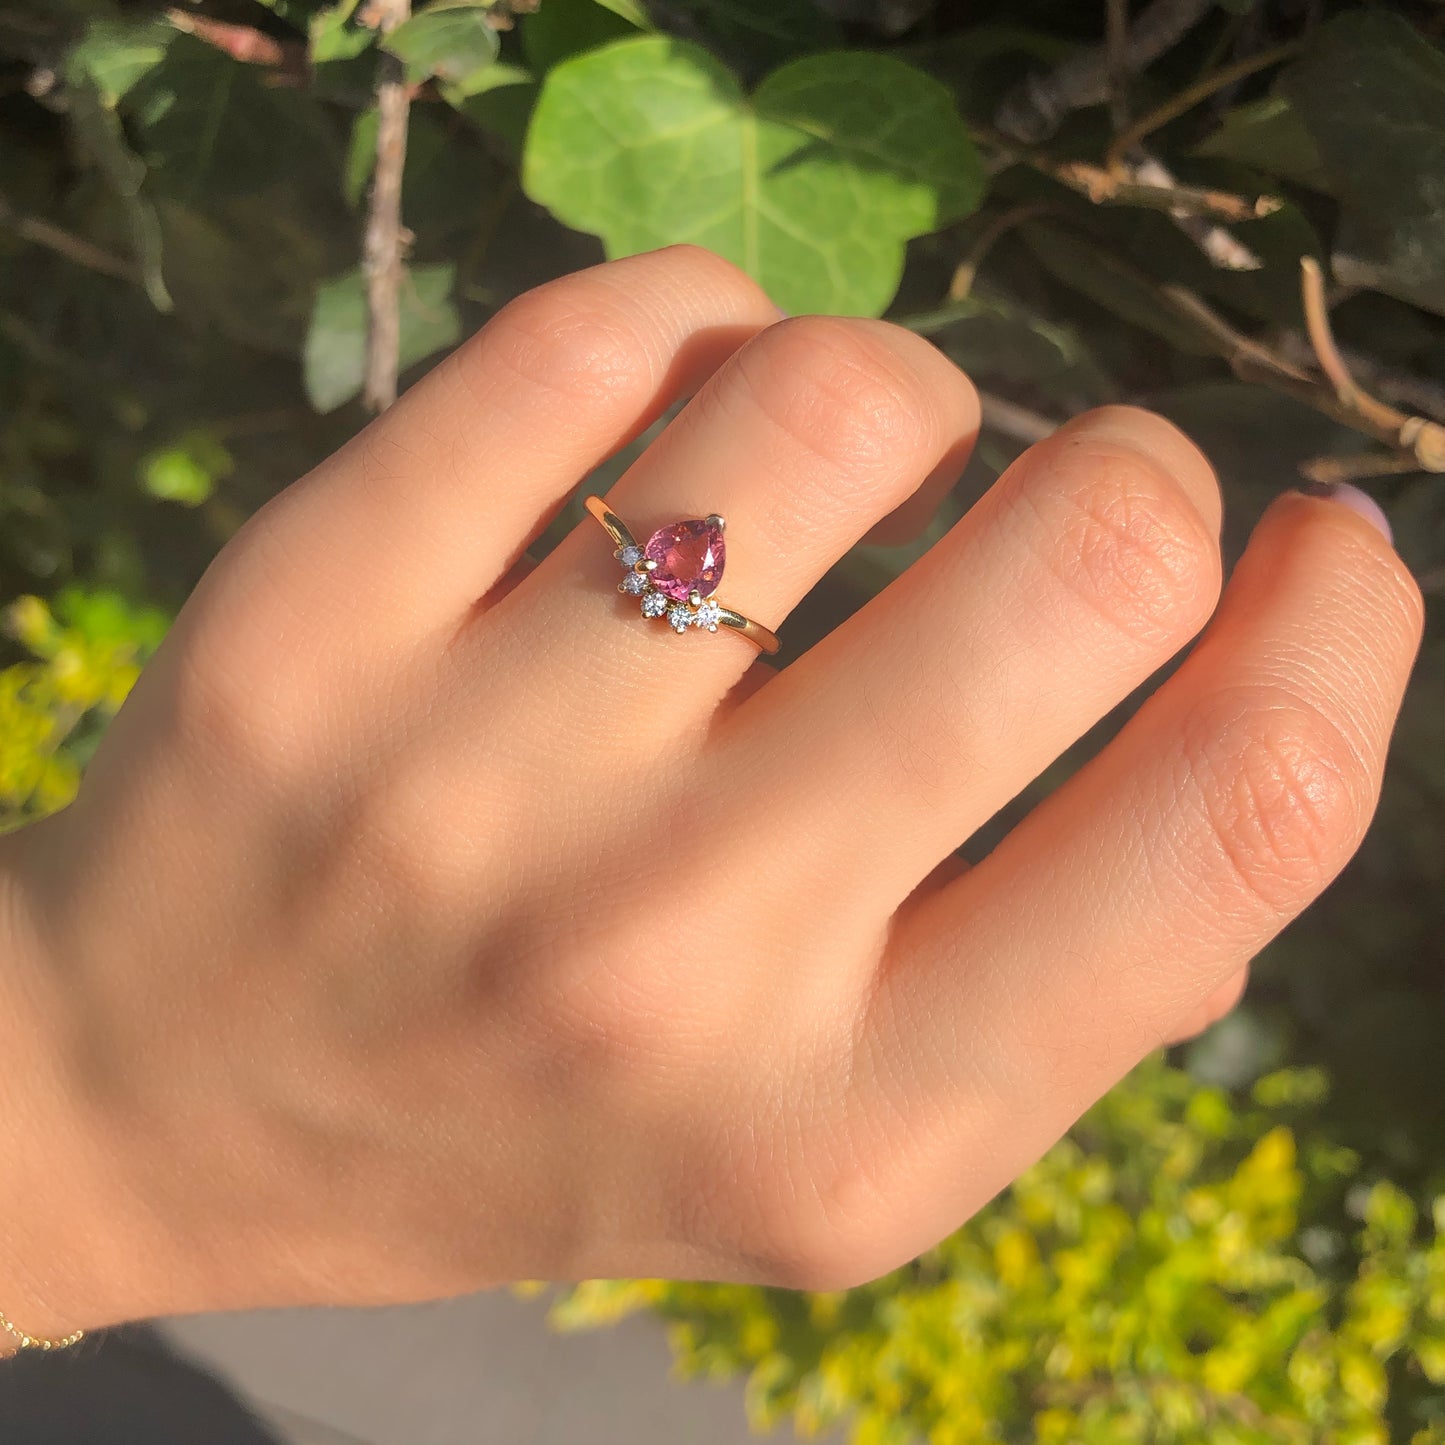 Pink Tourmaline Ring with Diamond Crown